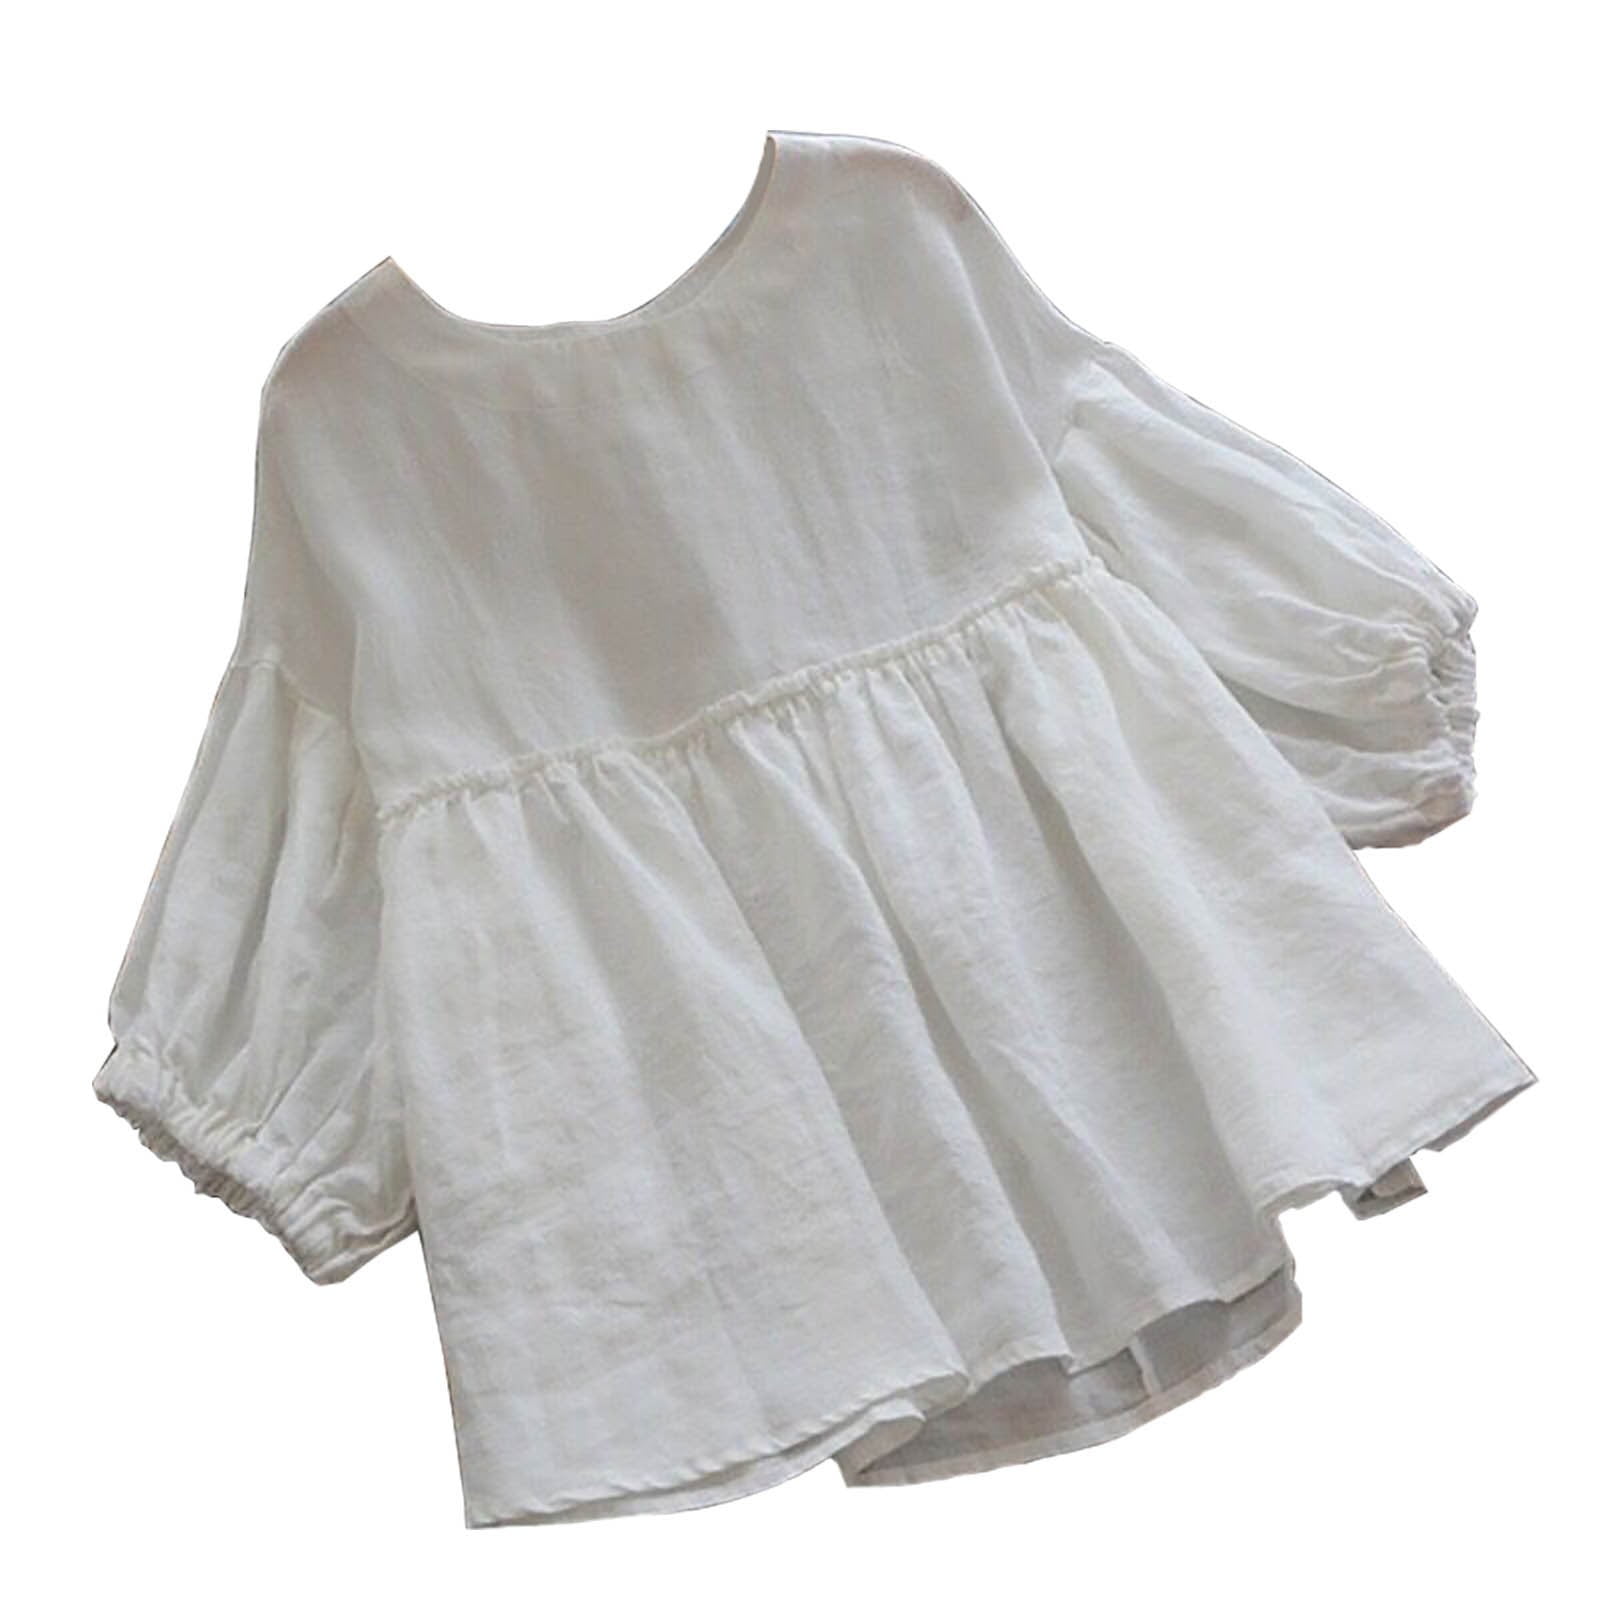 SMihono Women's Large Size Japanese Style Cotton Linen Tops